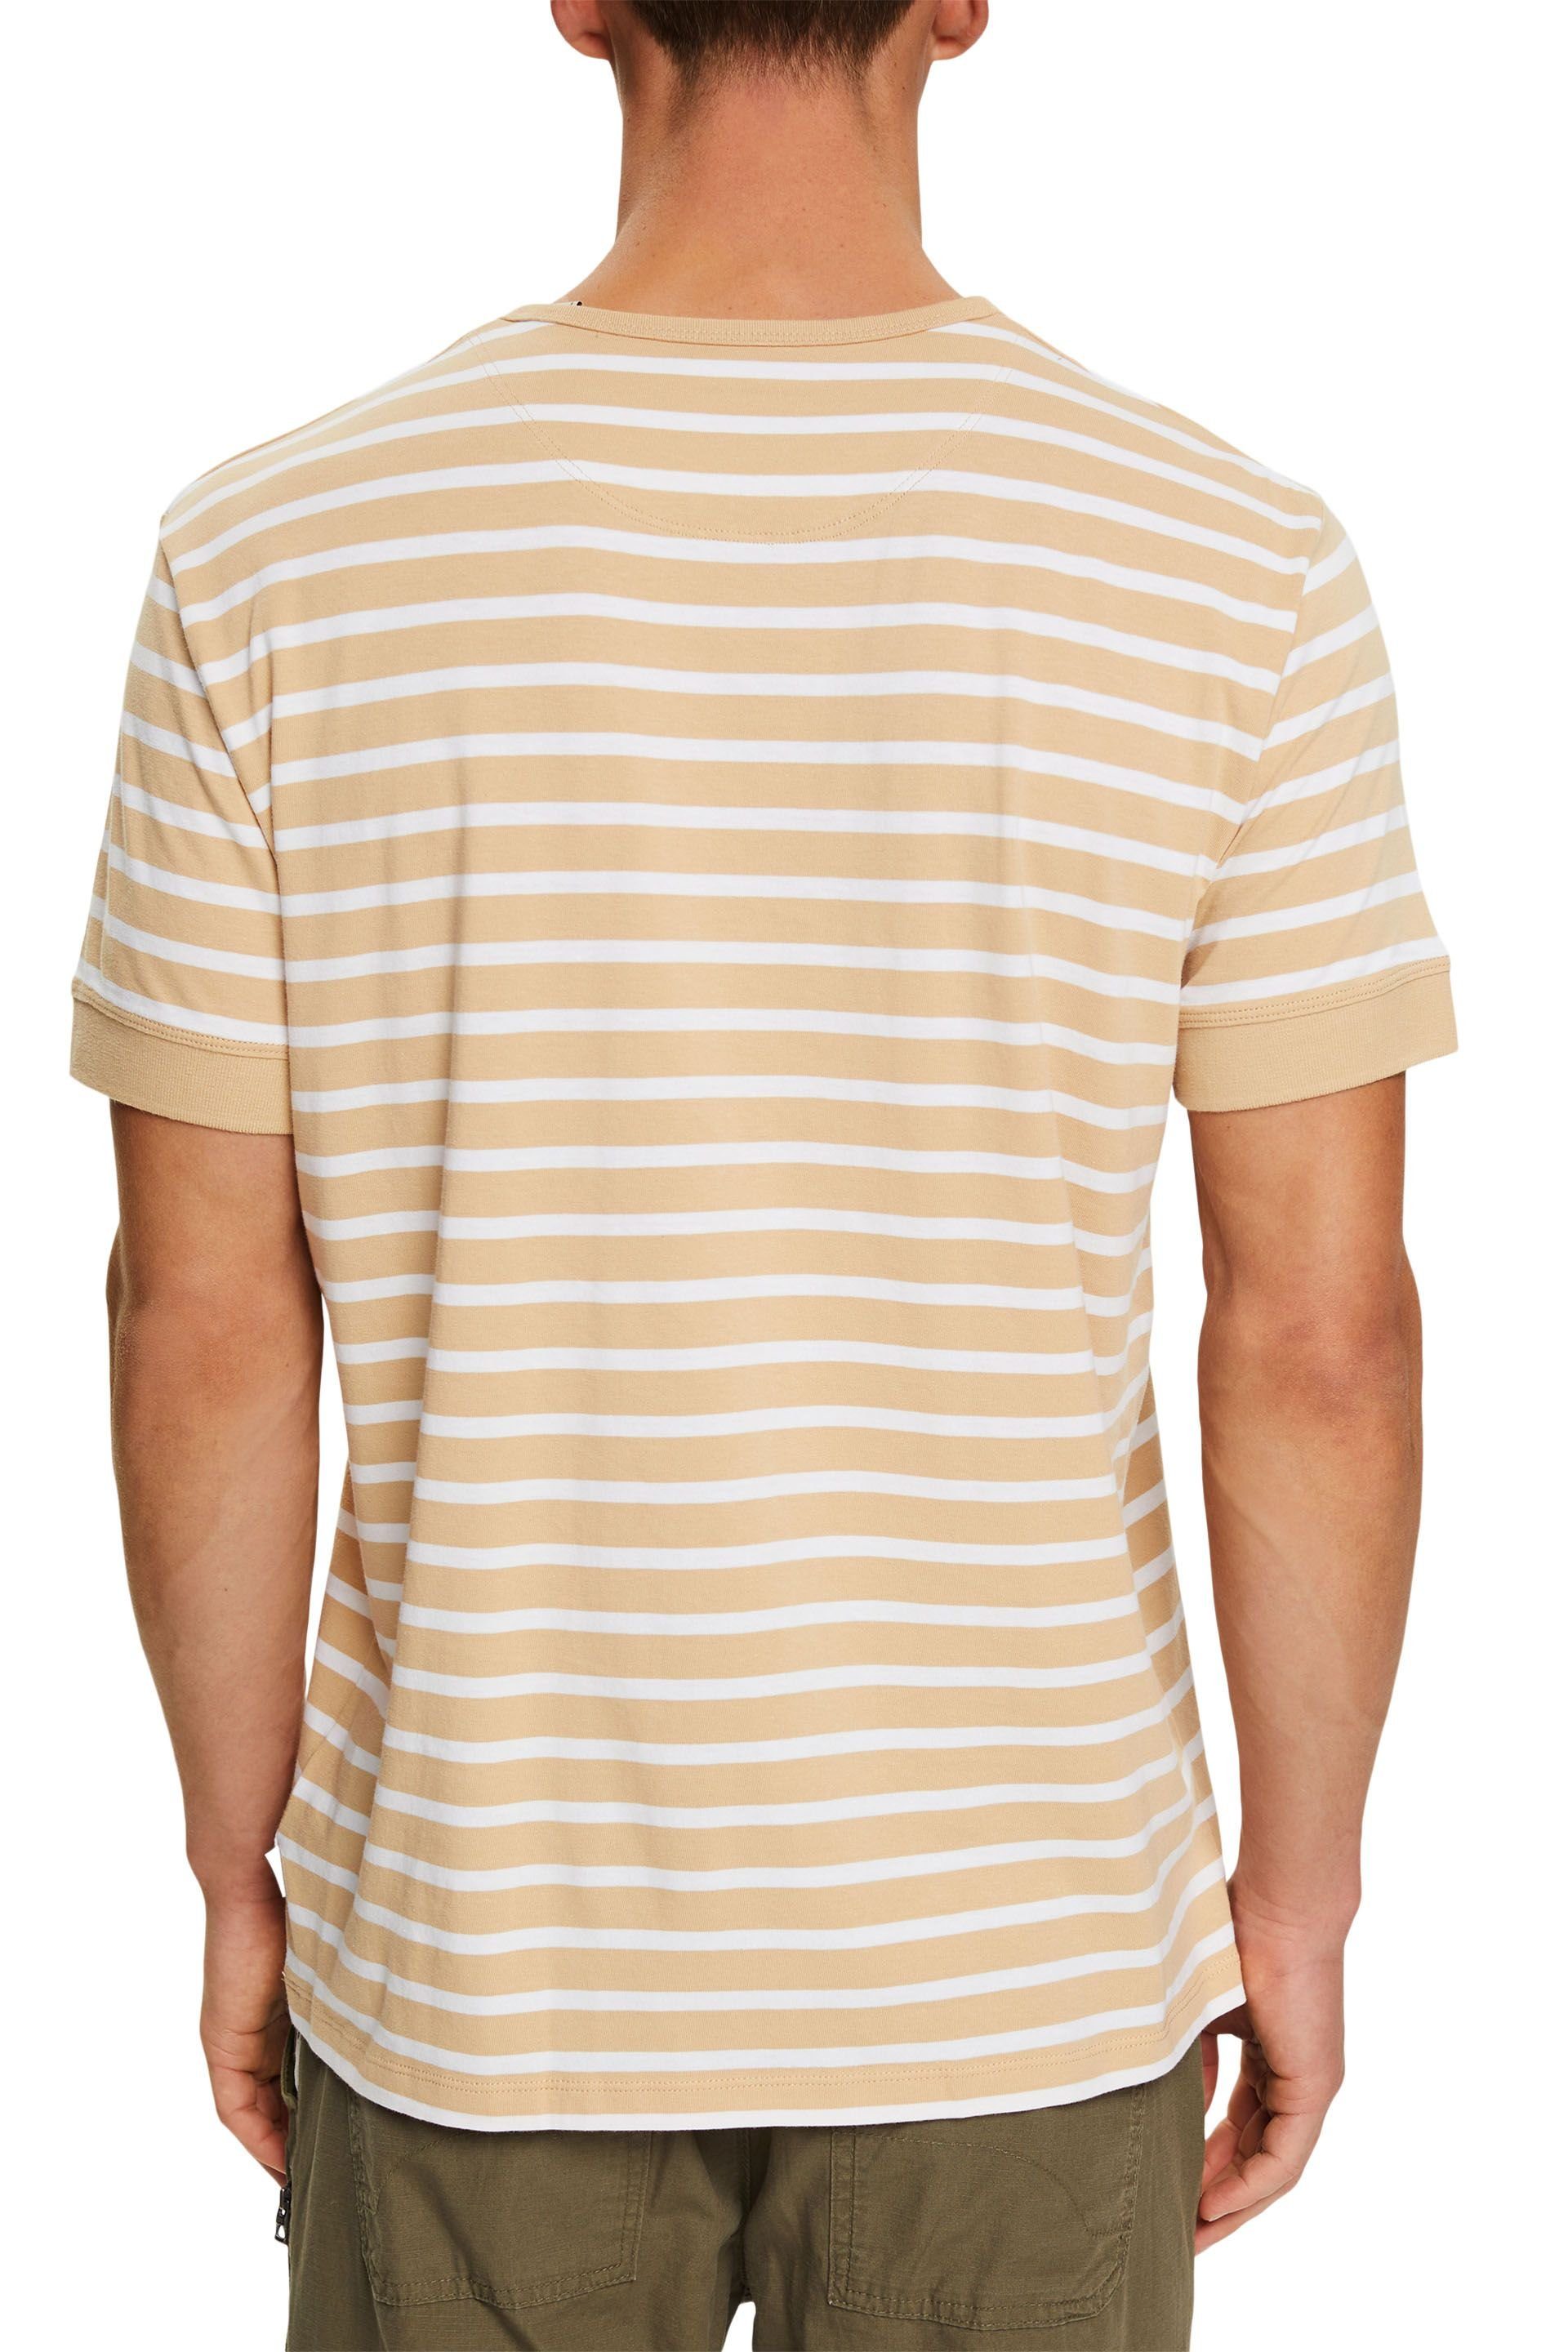 Esprit sand T-Shirt